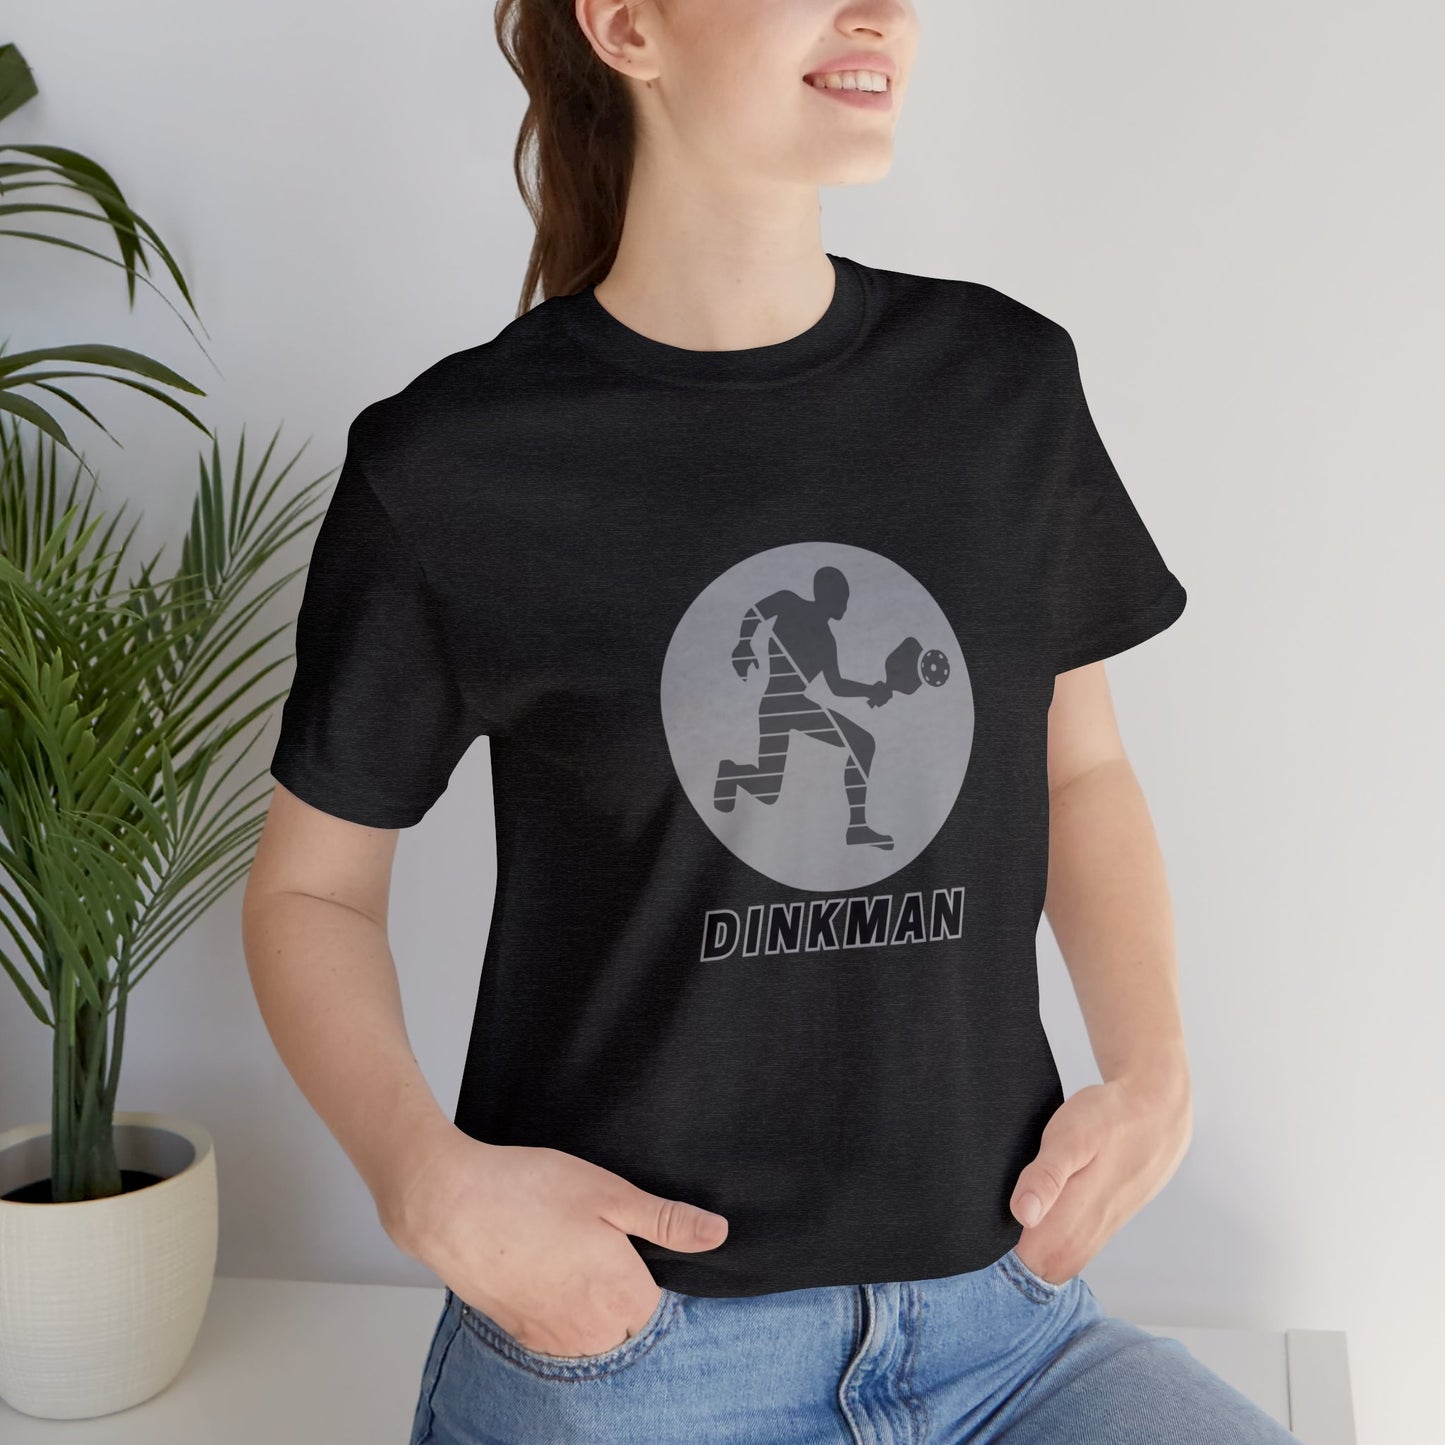 Pickleball Sports, Dinkman- Adult, Regular Fit, Soft Cotton, Smaller Size Image T-shirt